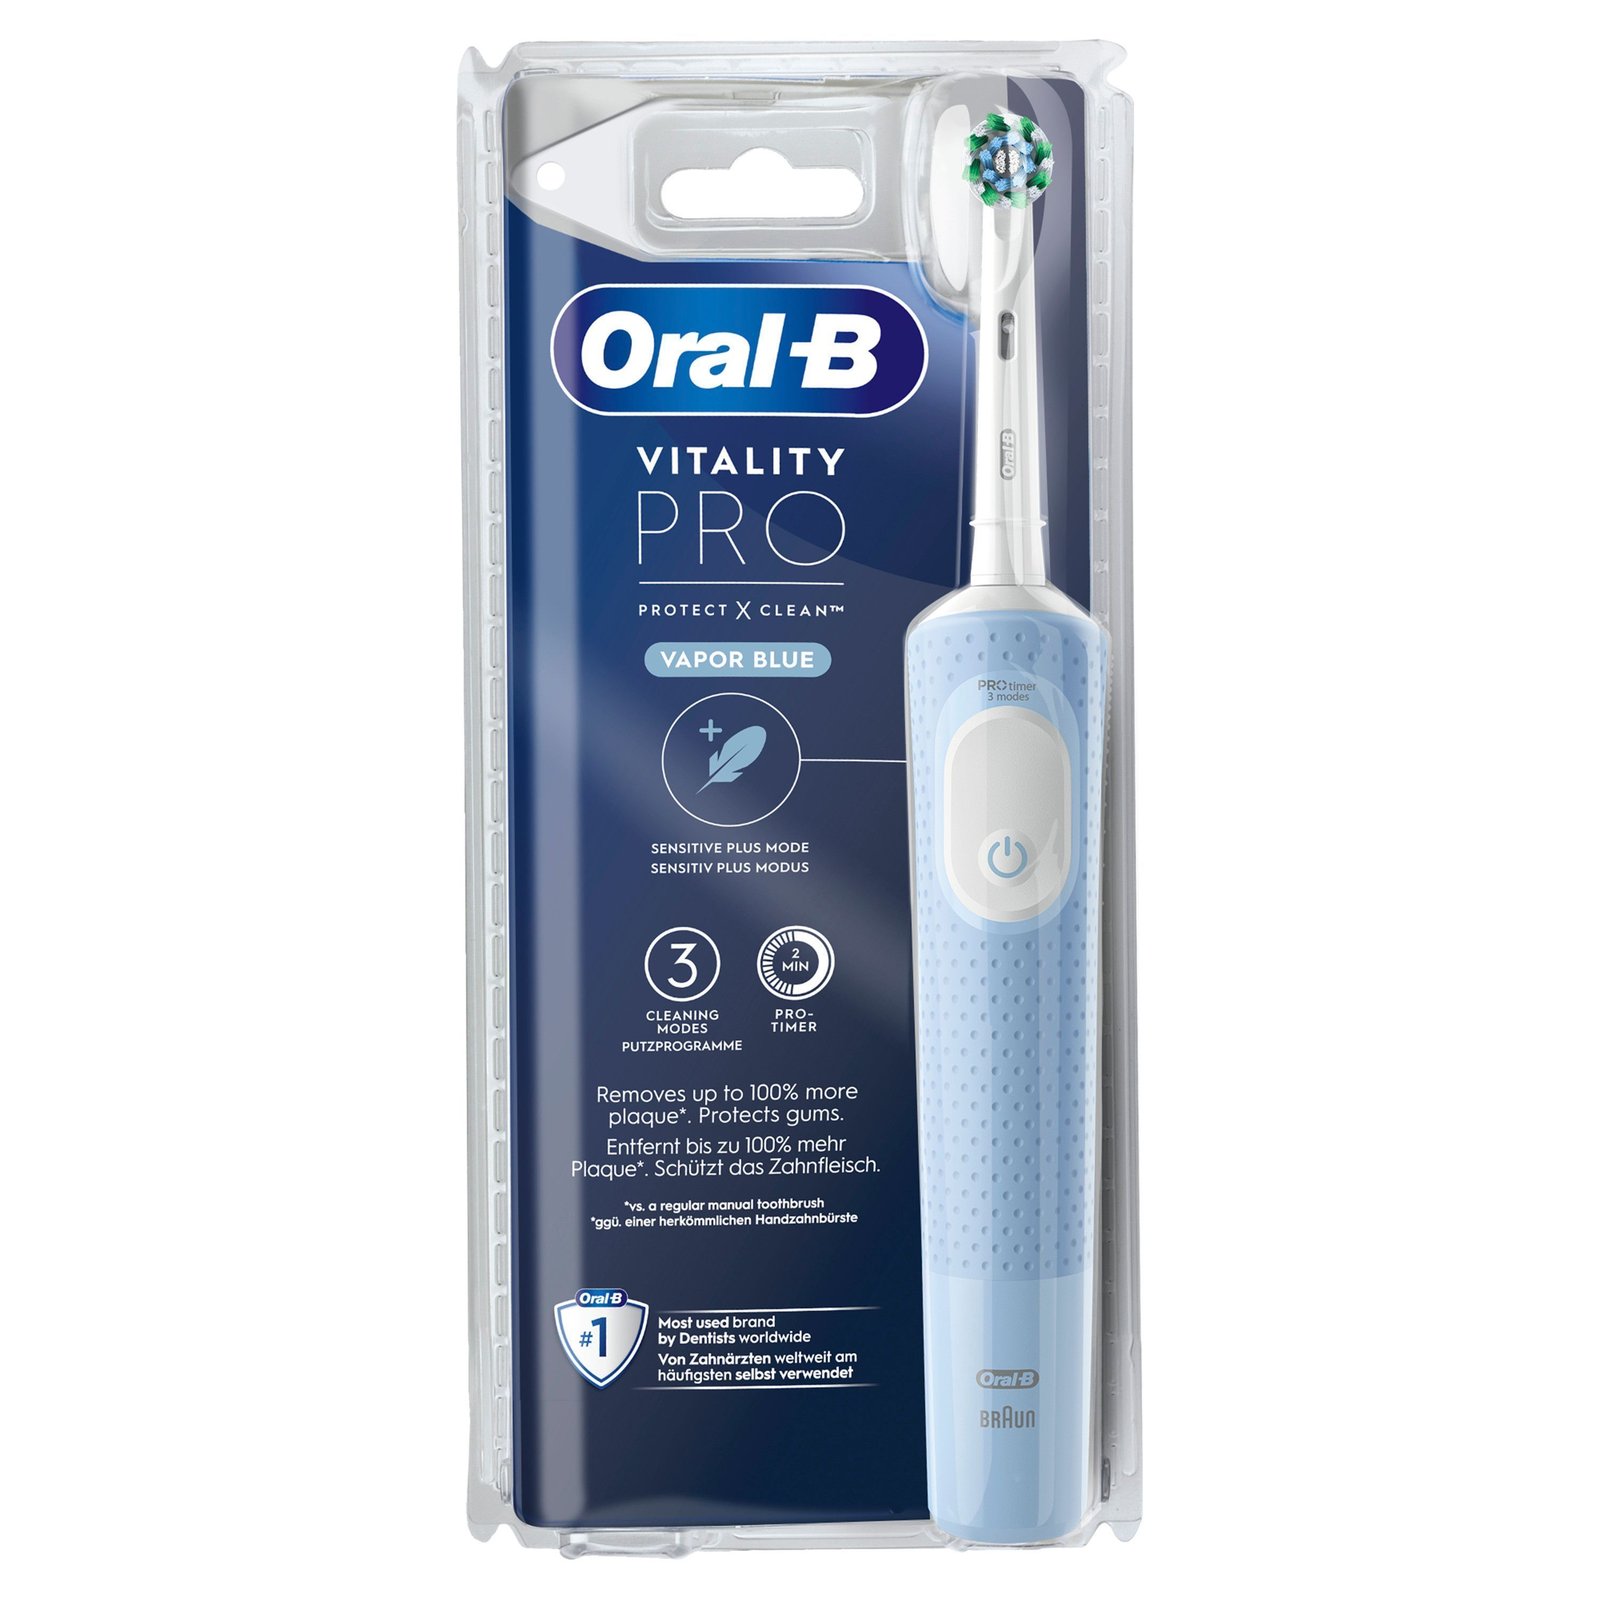 Oral-B Vitality Pro Vapor Blue CA CLS